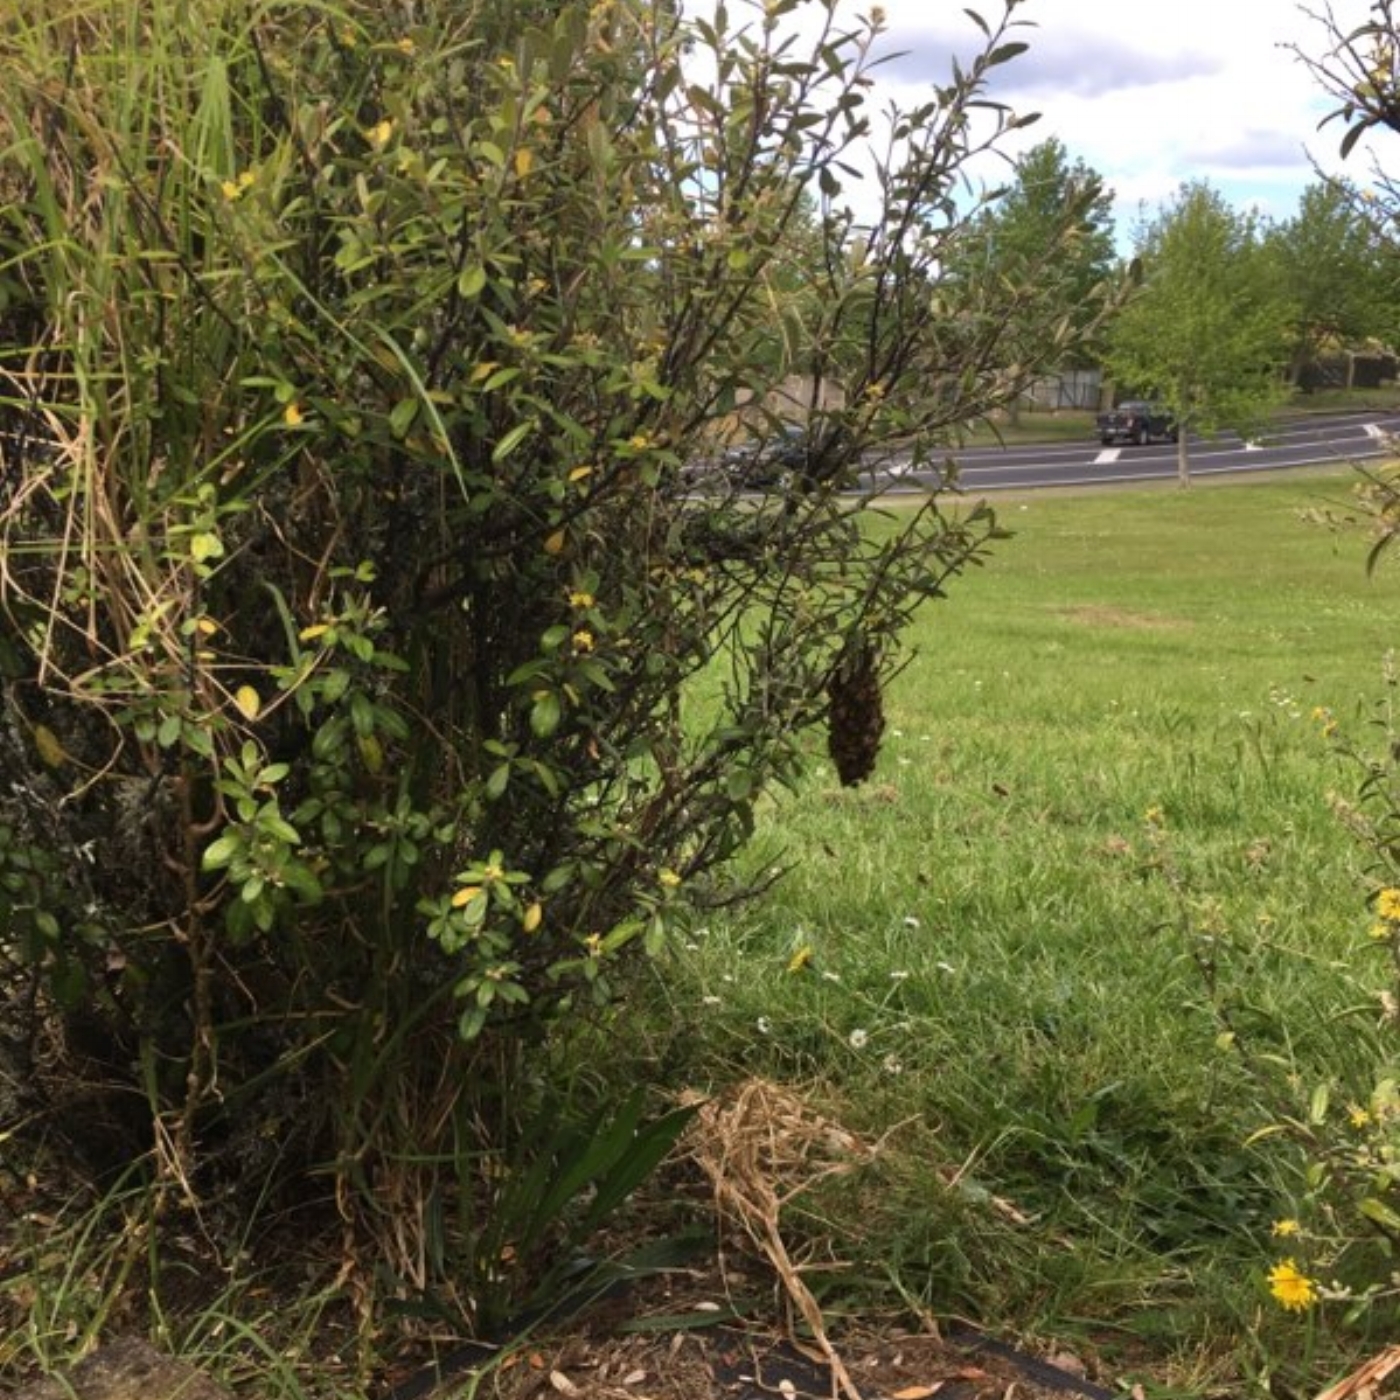 Bee Swarm left behind on bush